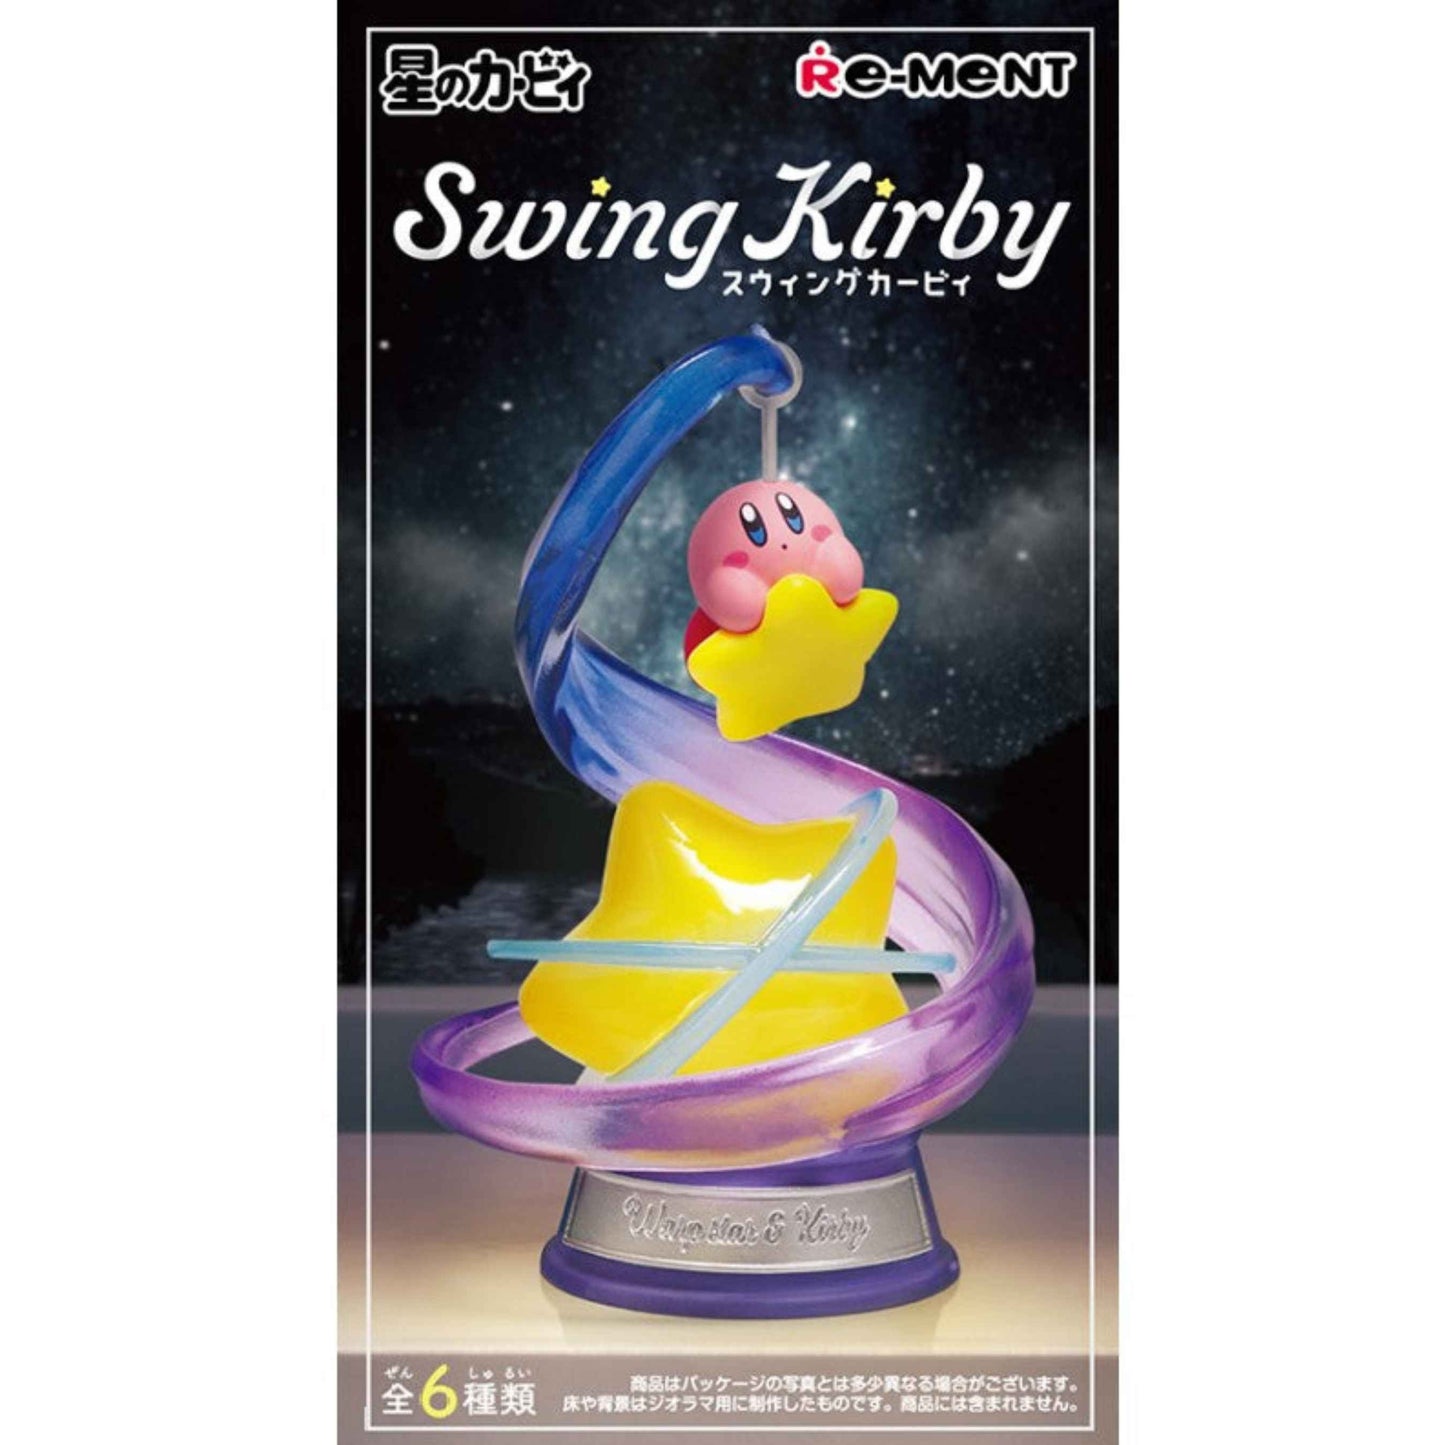 【New】re-Ment: Swing Kirby Series Blind Box Random Style